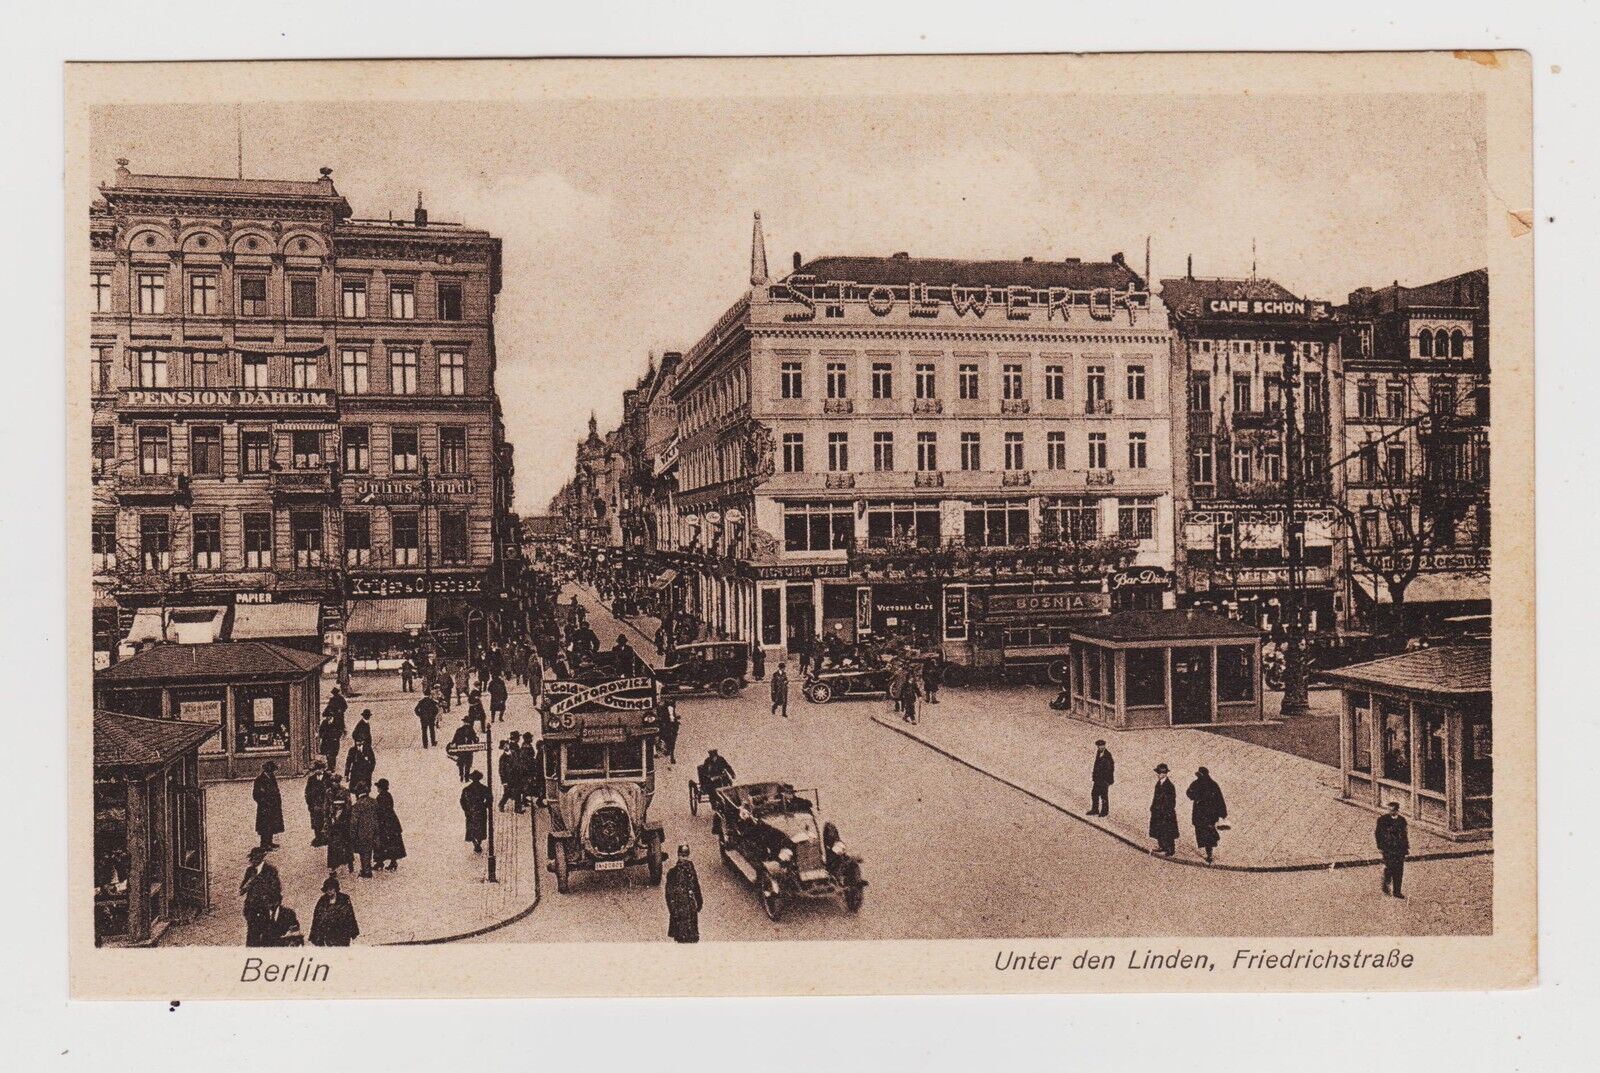 Berlin,Germany,Unter den Linden,Friedrichstrasse,Vintage Cars,1927